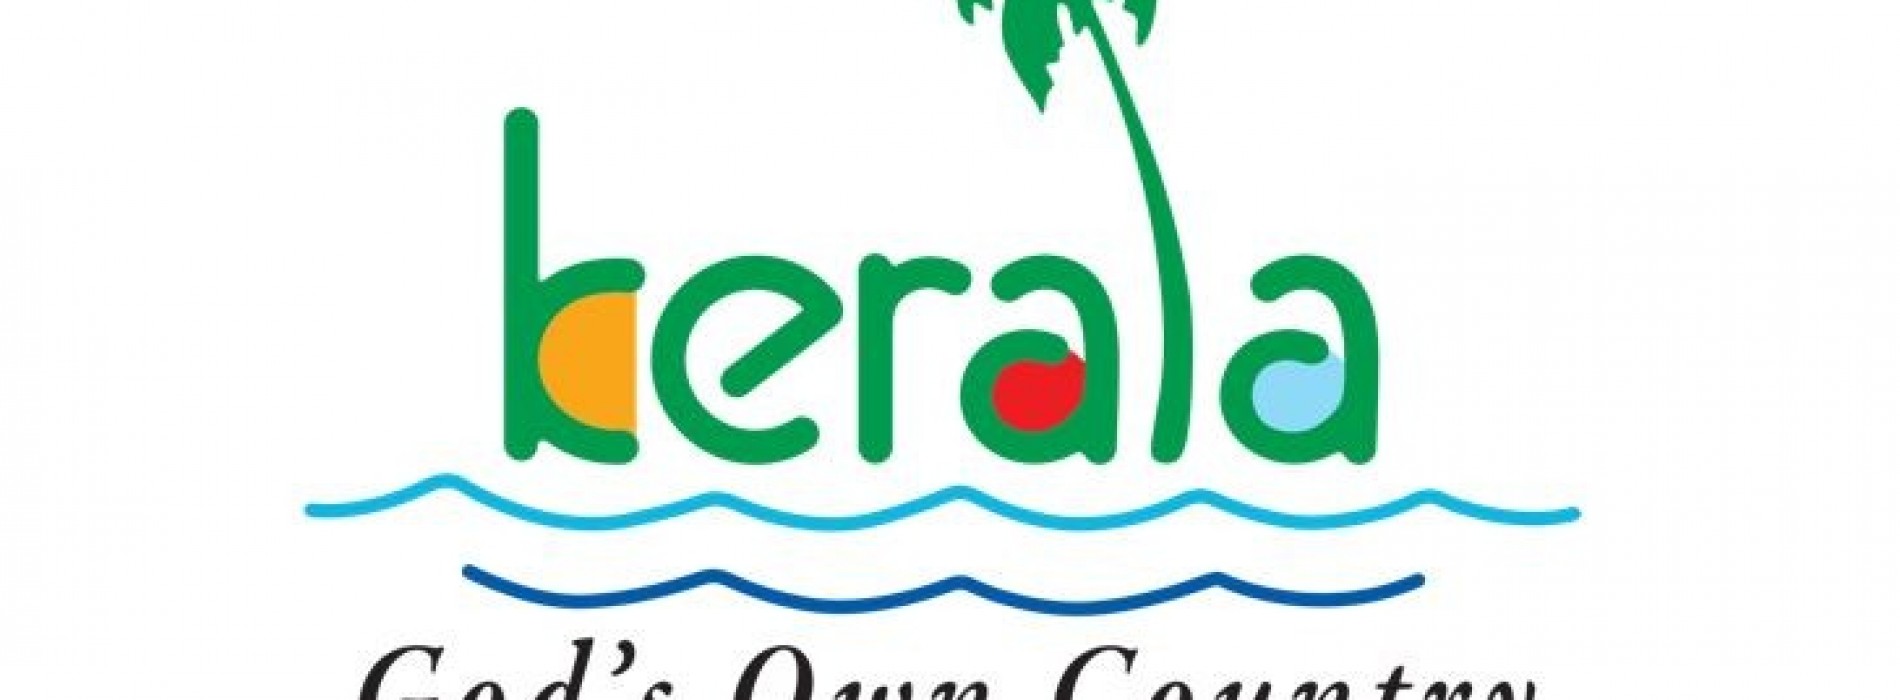 Kerala Tourism plans to participate in Arabian Travel Market